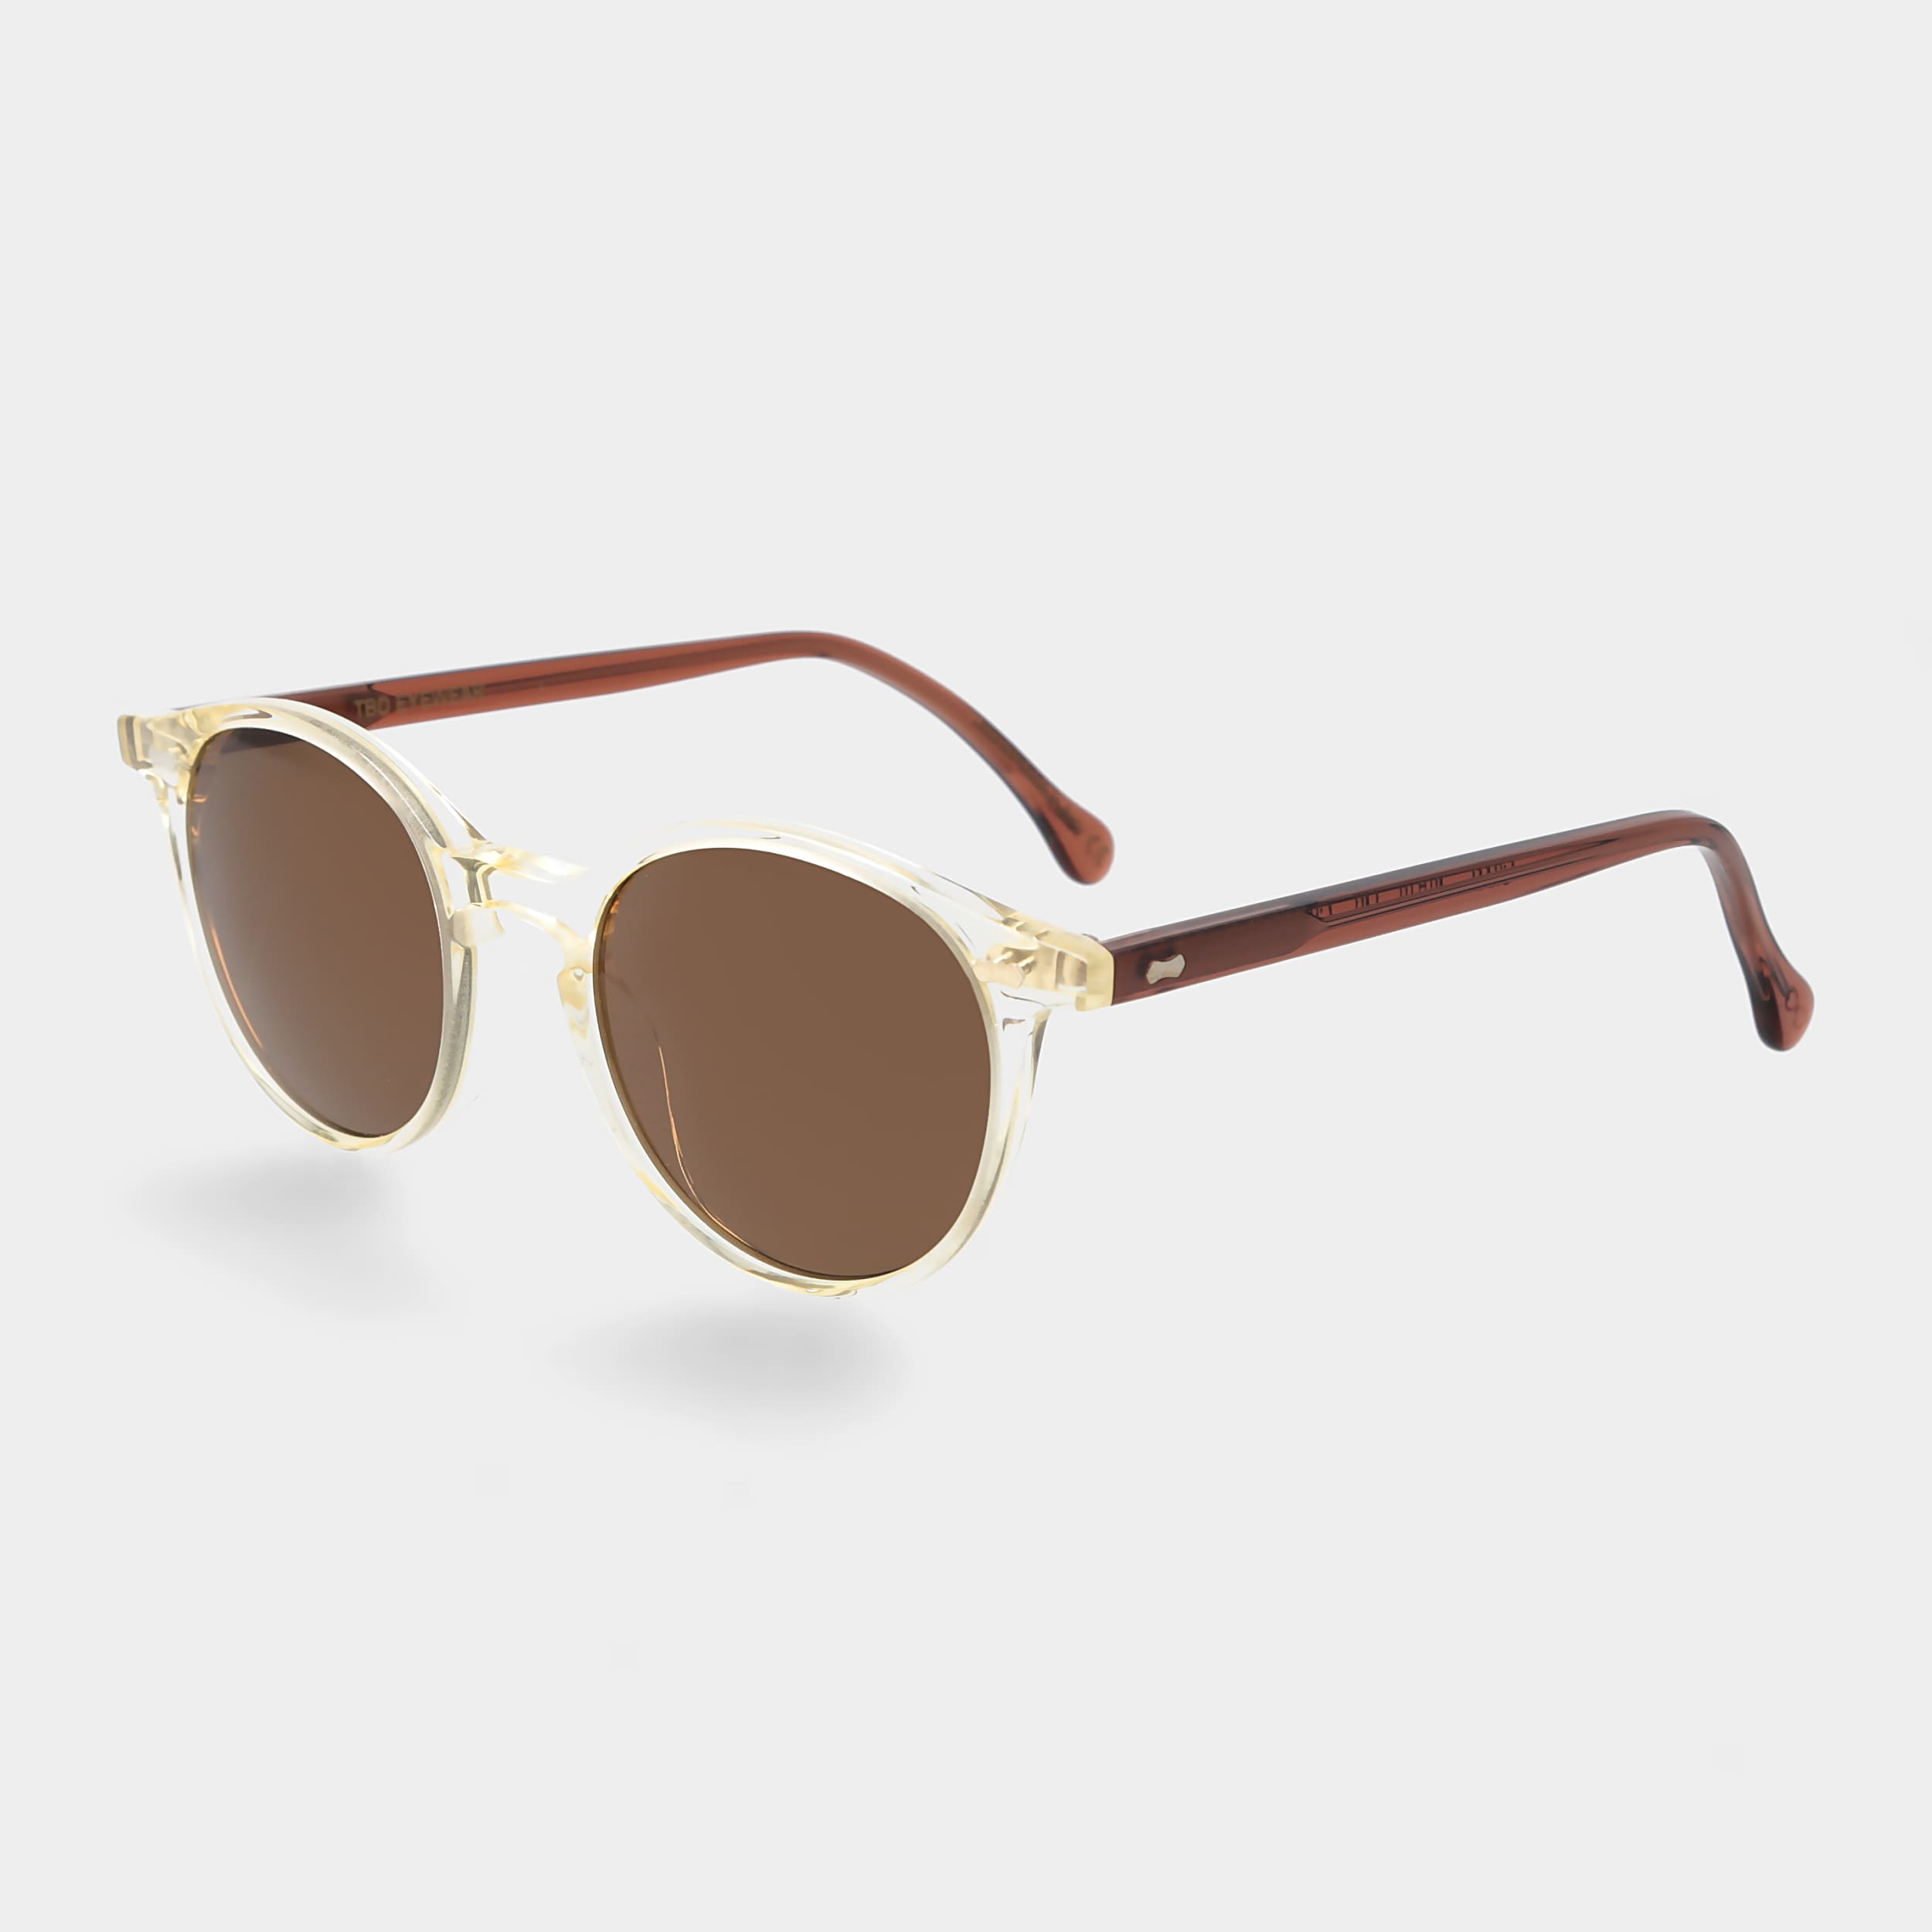 sunglasses-cran-bicolor-tobacco-tbd-eyewear-total